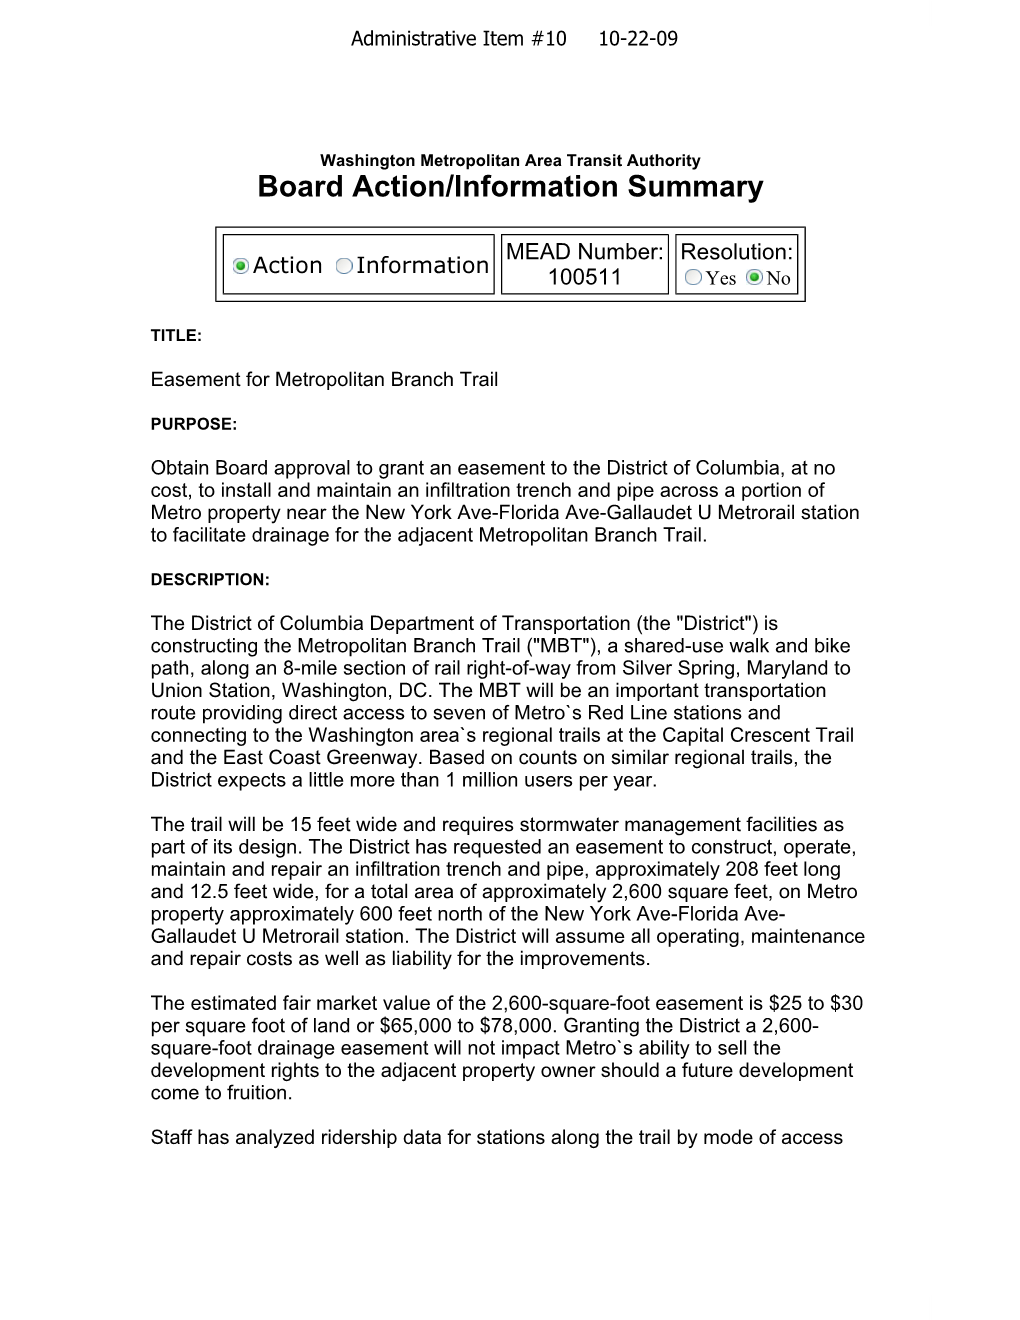 Board Action/Information Summary